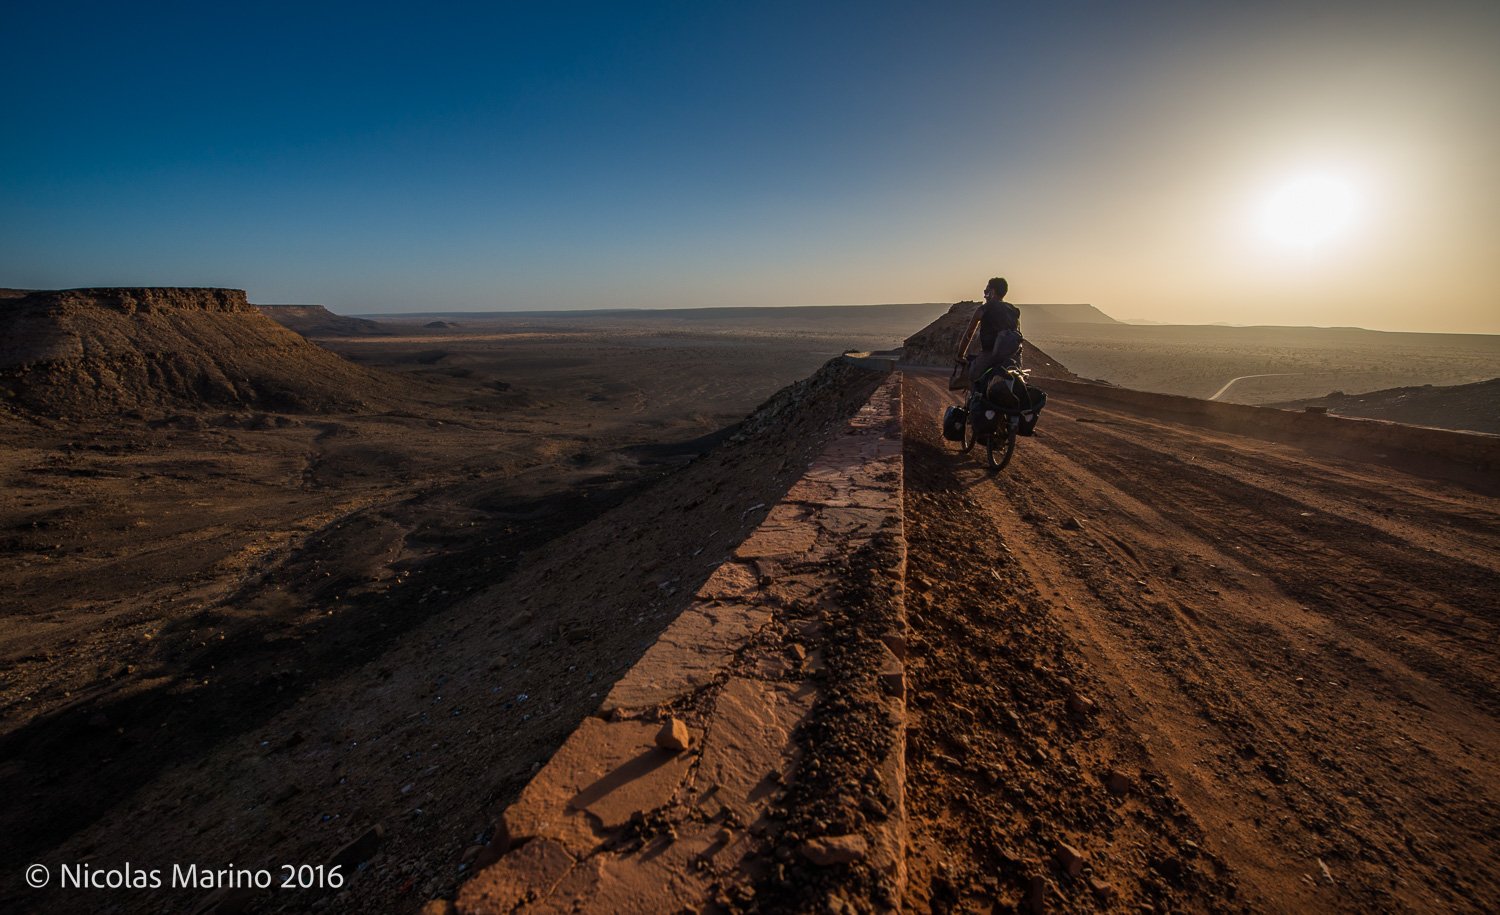  Cycling in the Adrar region of the Sahara desert. Mauritania 